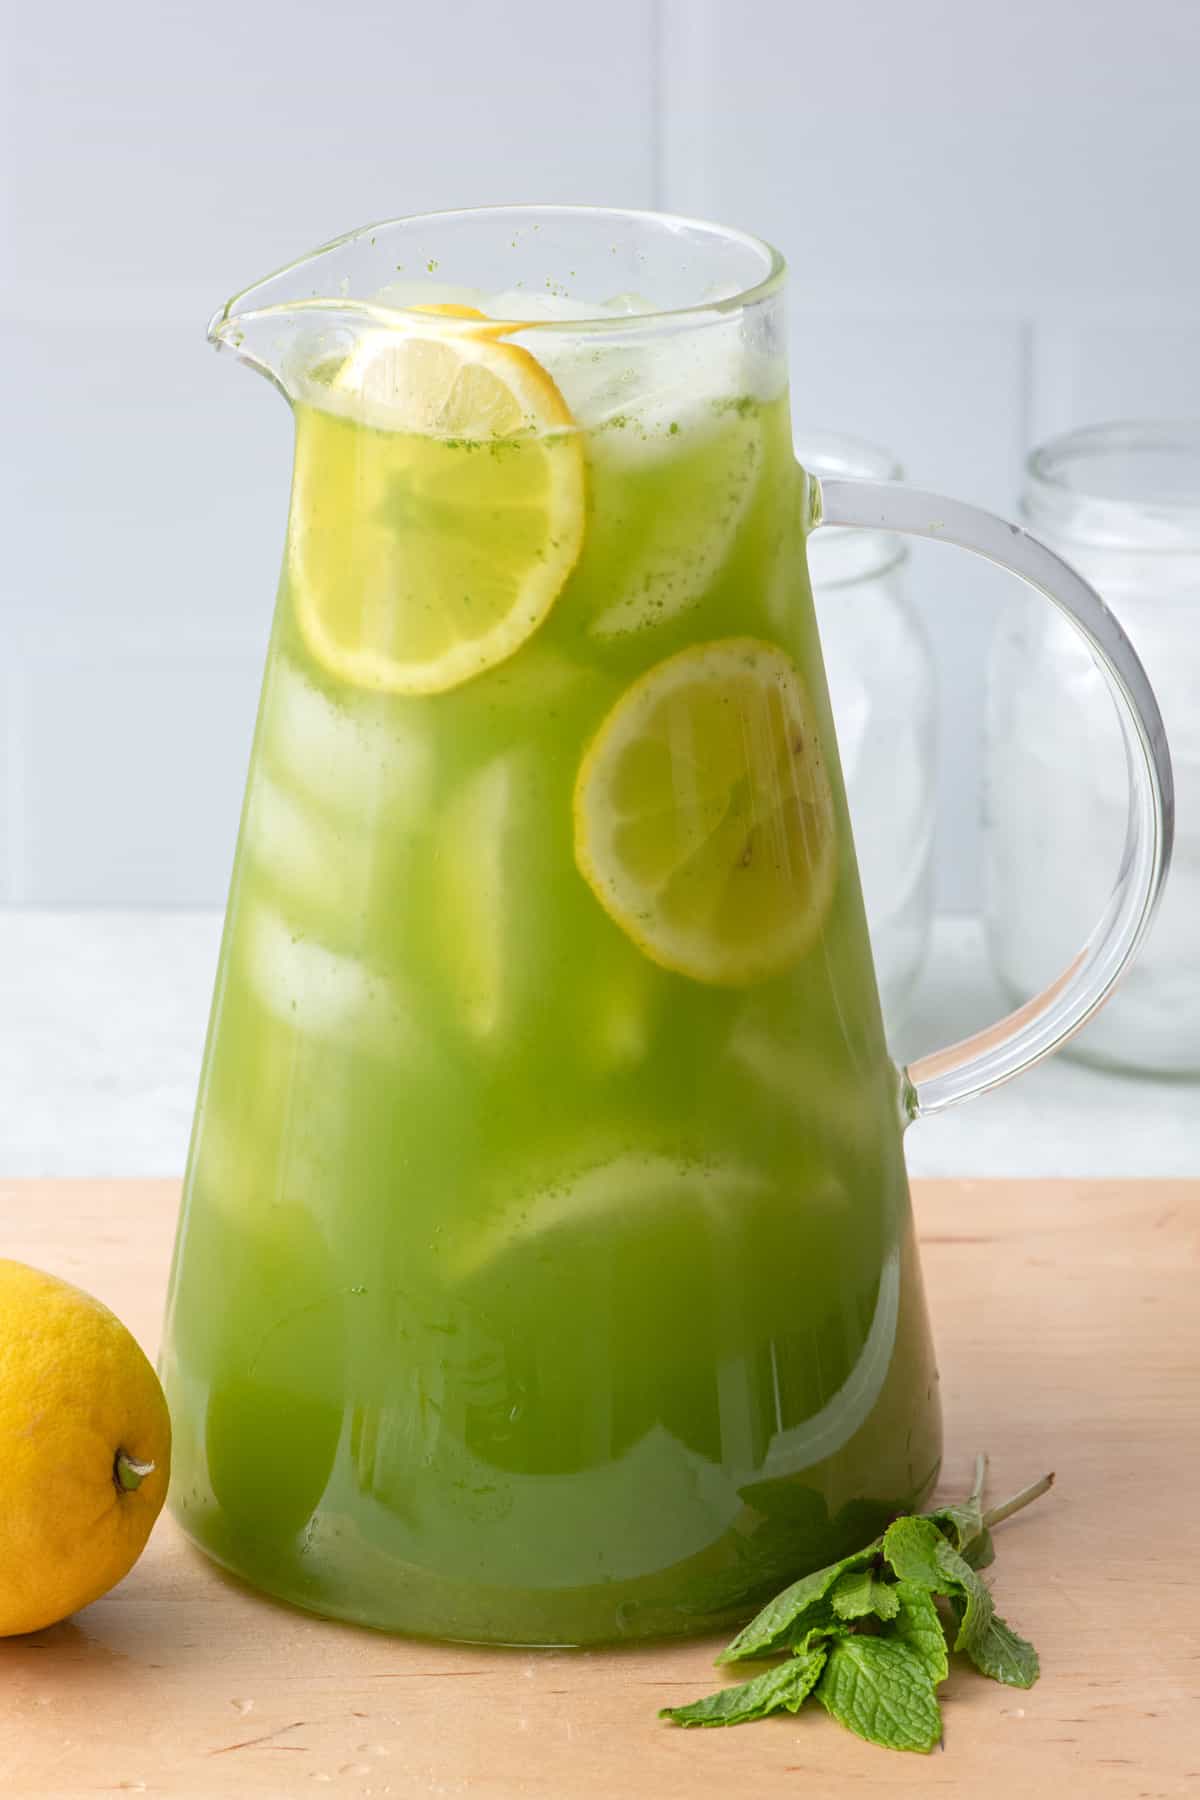 Pitcher of mint lemonade with fresh lemon slices.